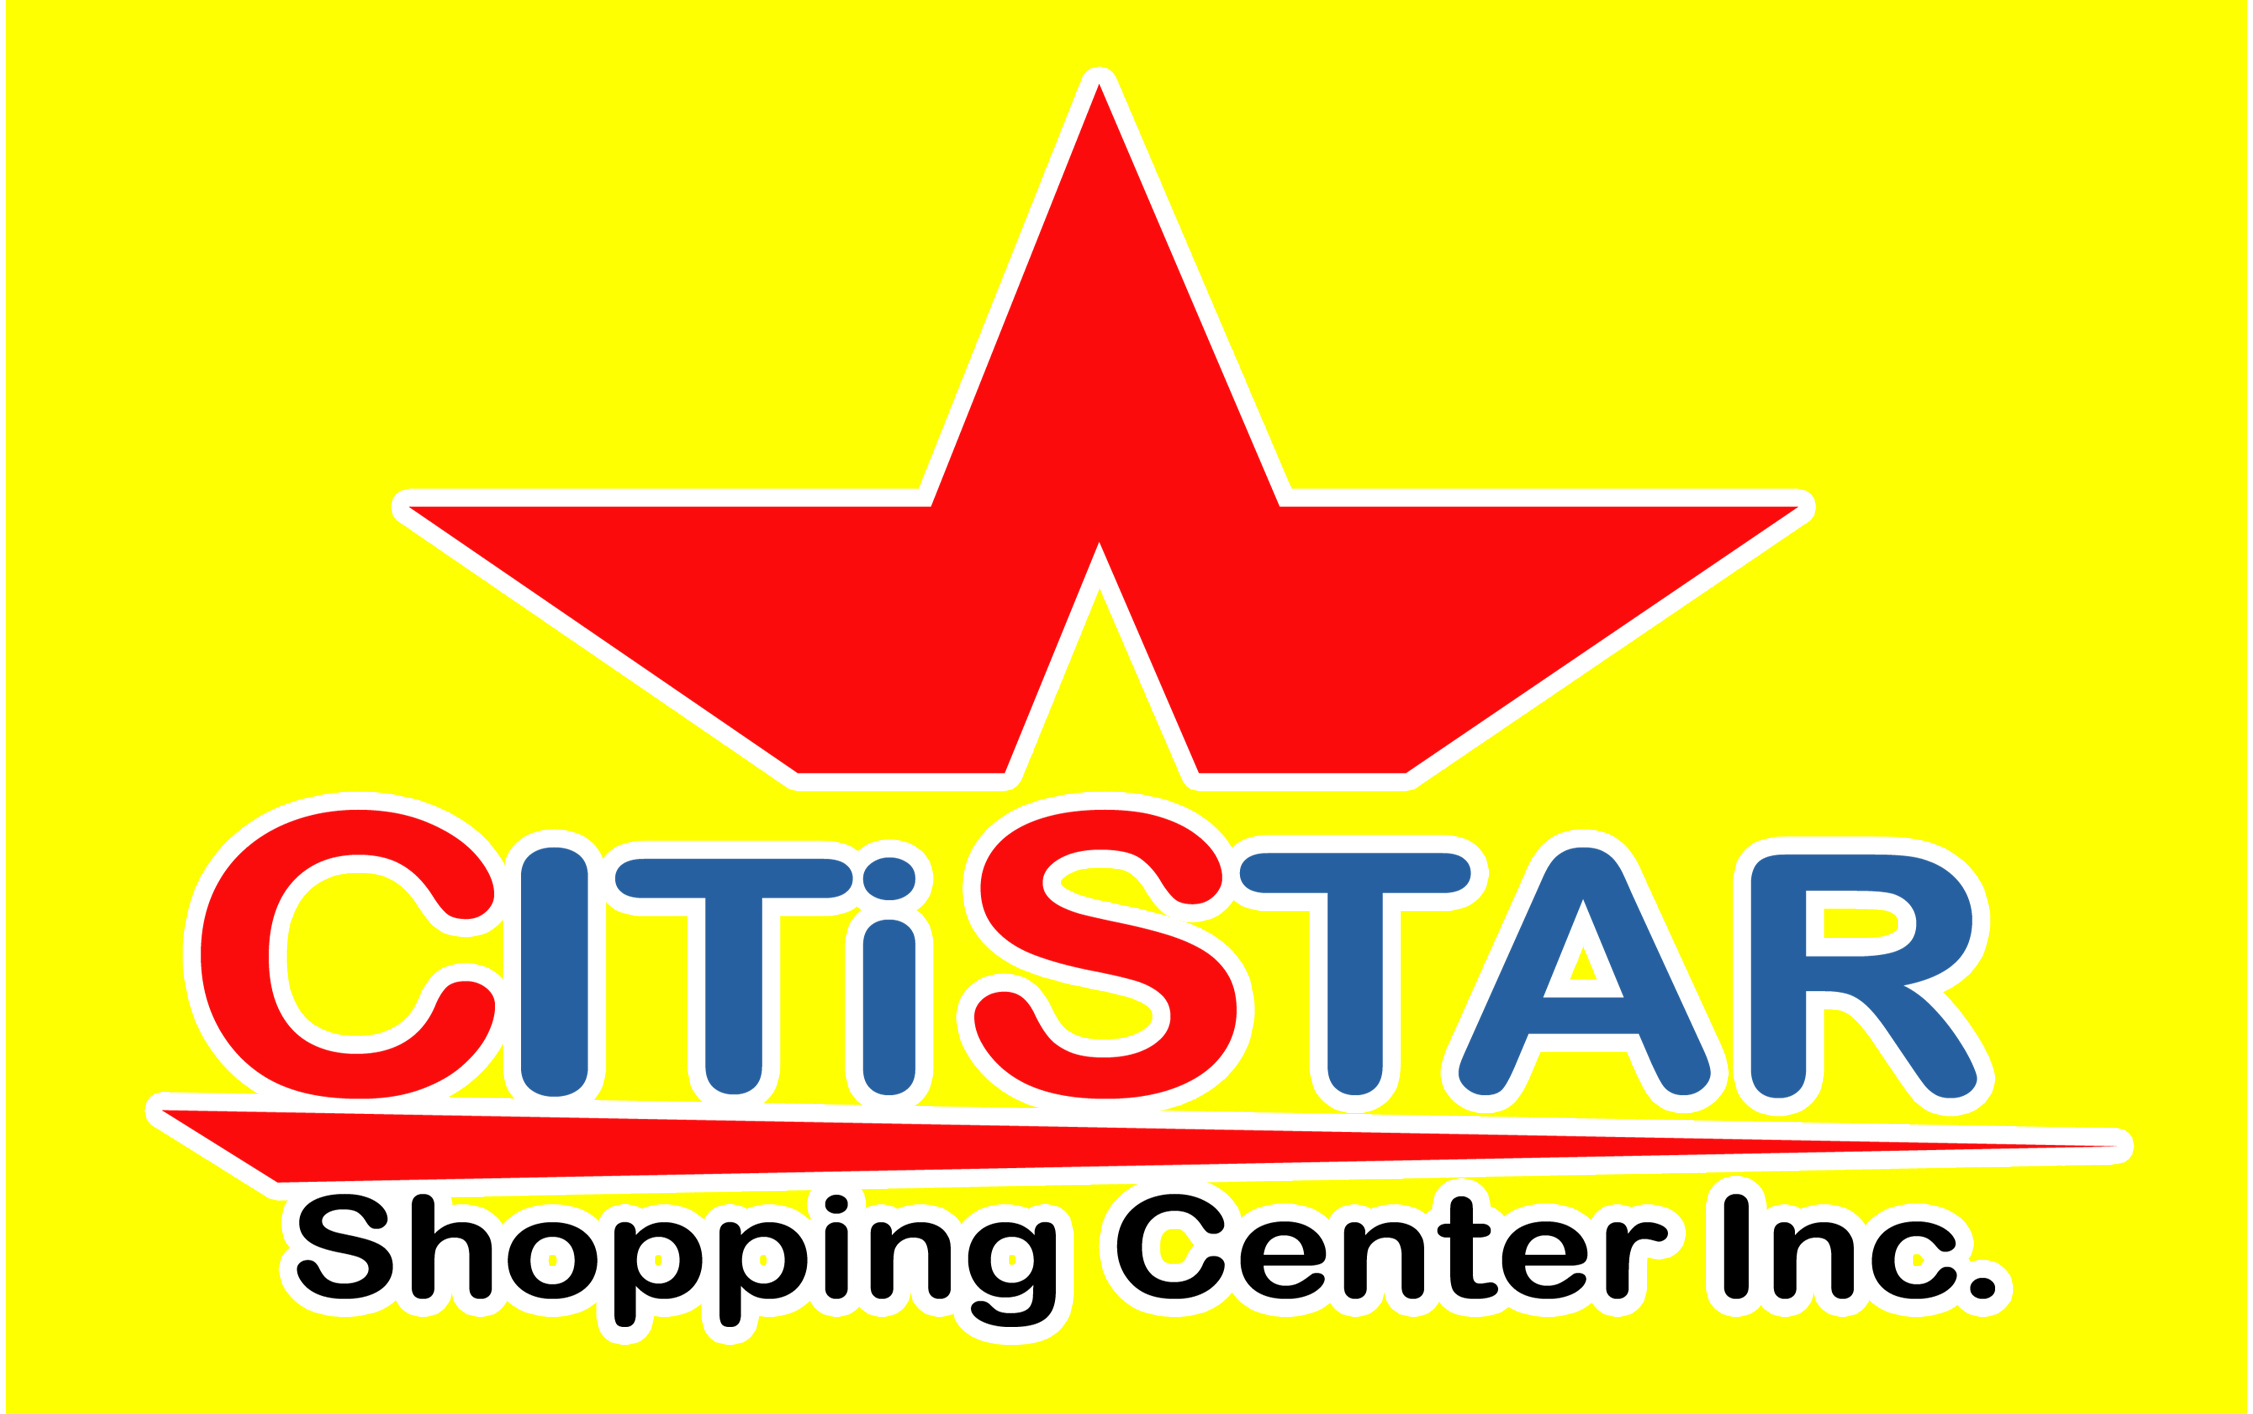 CitiStar Shopping Center Inc.